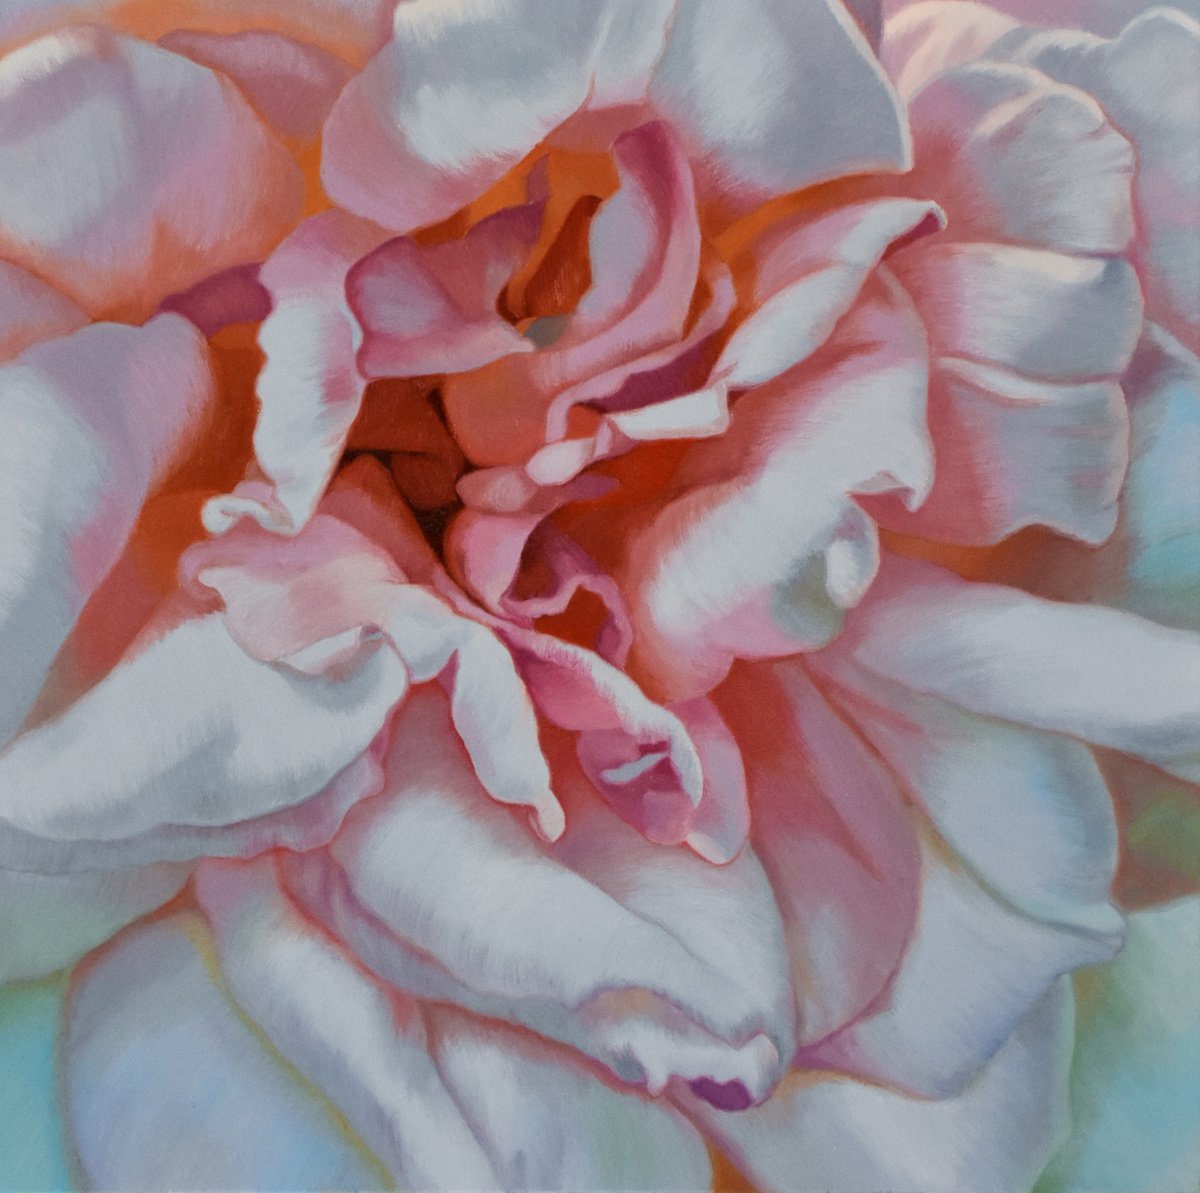 Morning Rose by Chloe Hedden